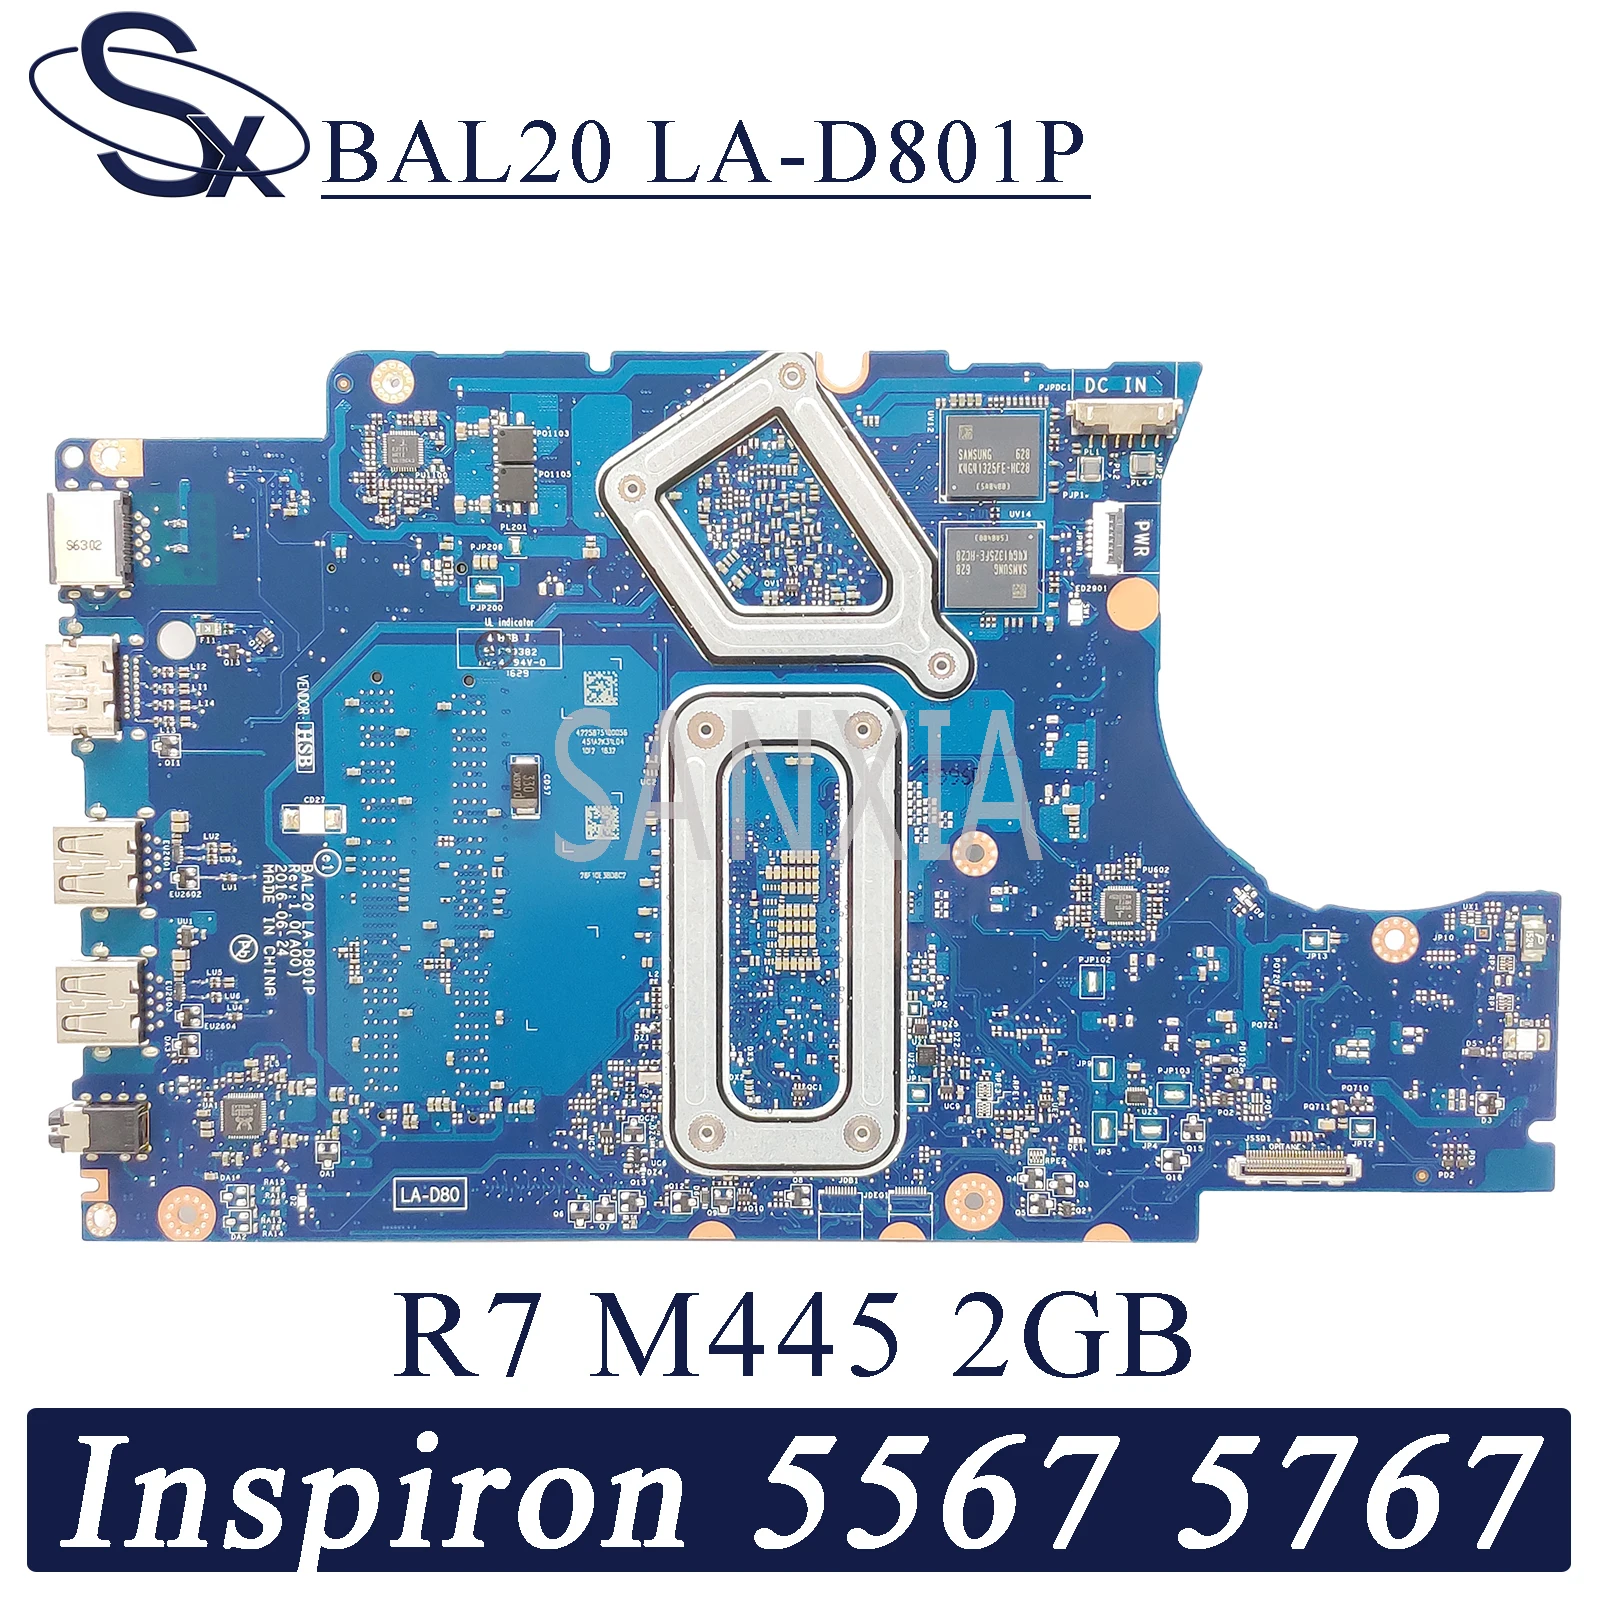 US $251.10 KEFU LAD801P Laptop motherboard for Dell Inspiron 155567 175767 original mainboard I57200U R7M445